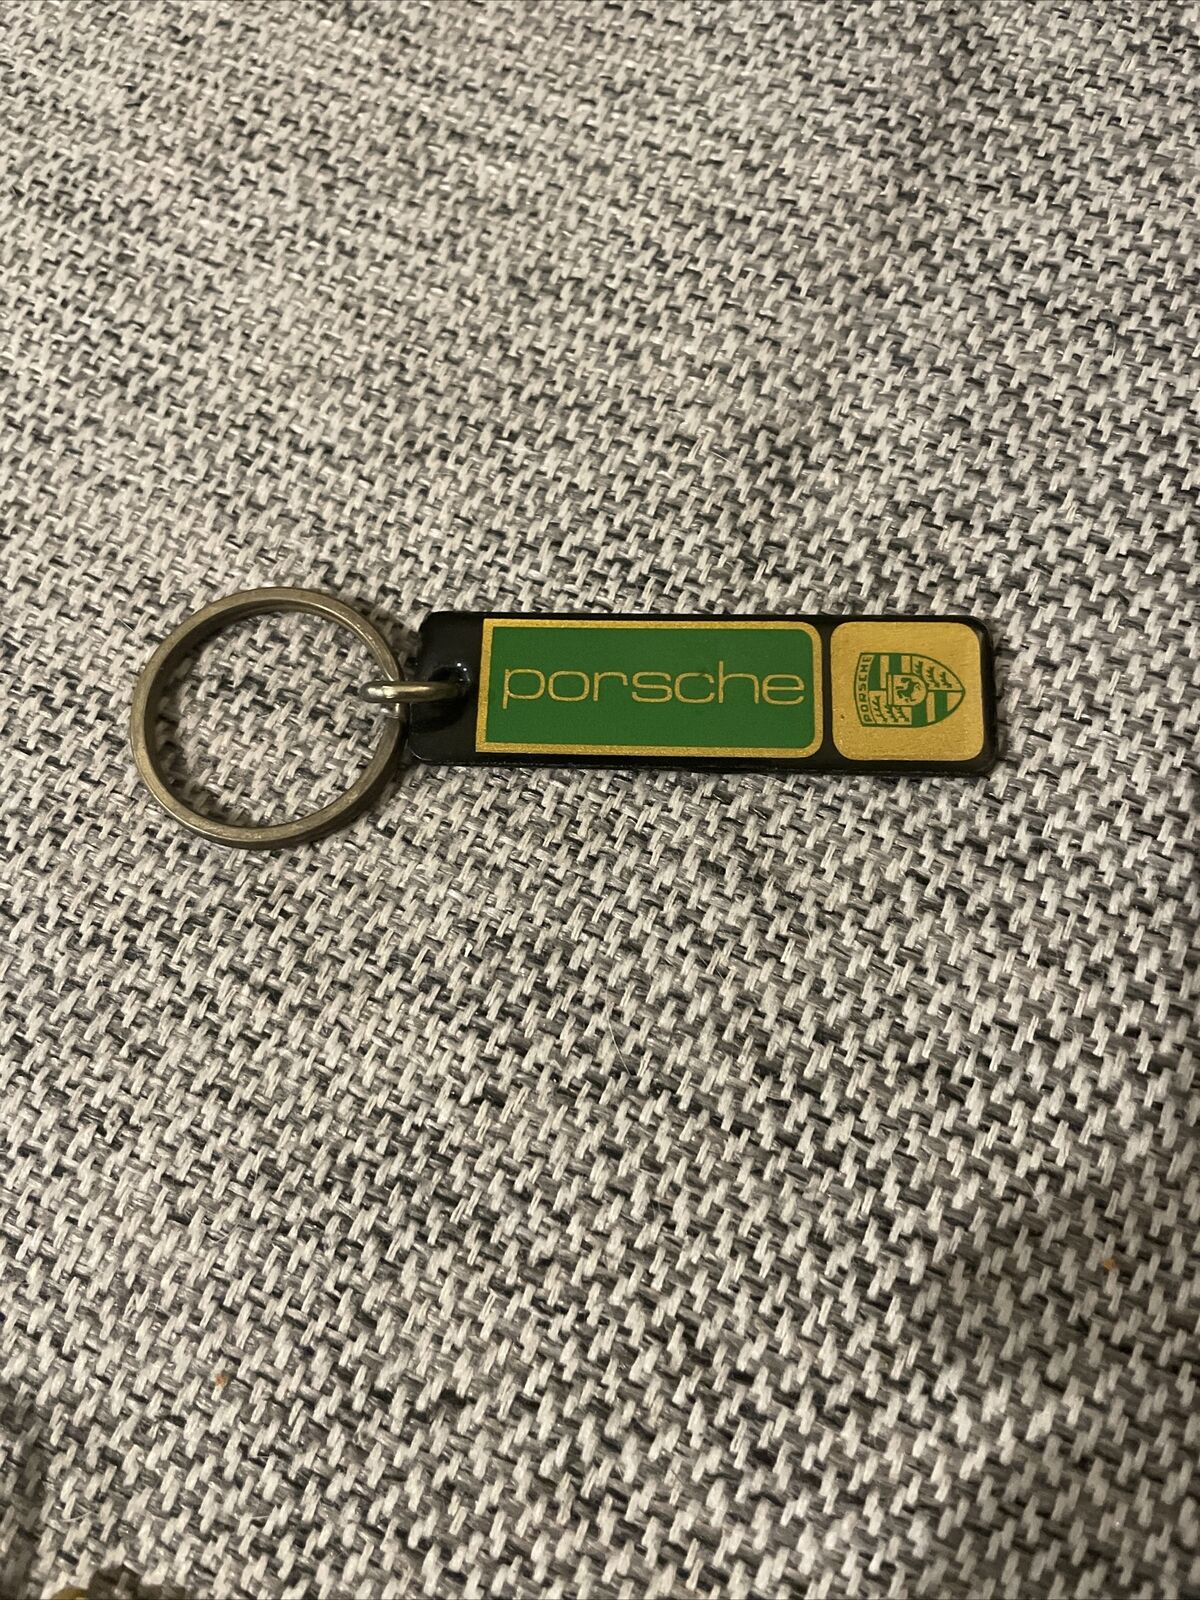 Vintage Rare Porsche Keychain. Green And Yellow.